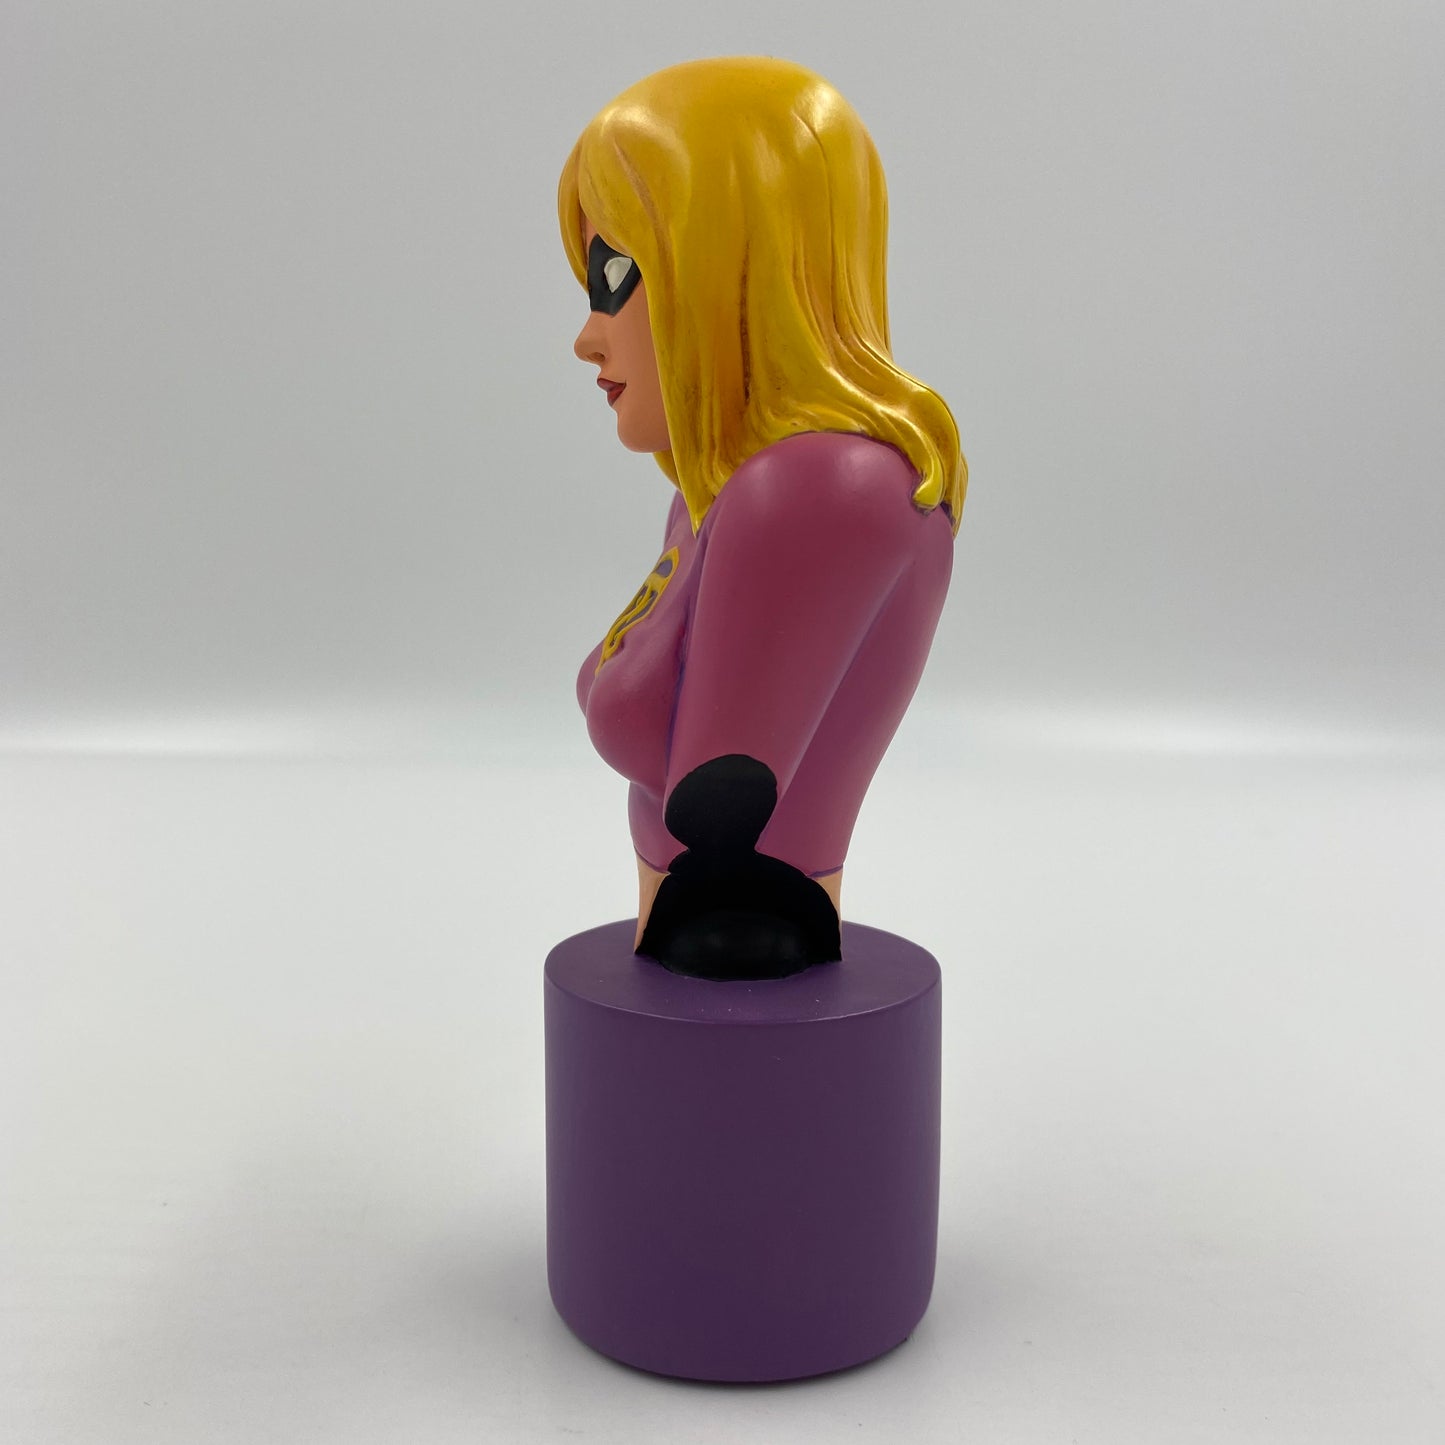 It Girl mini-bust (2002) Bowen Designs